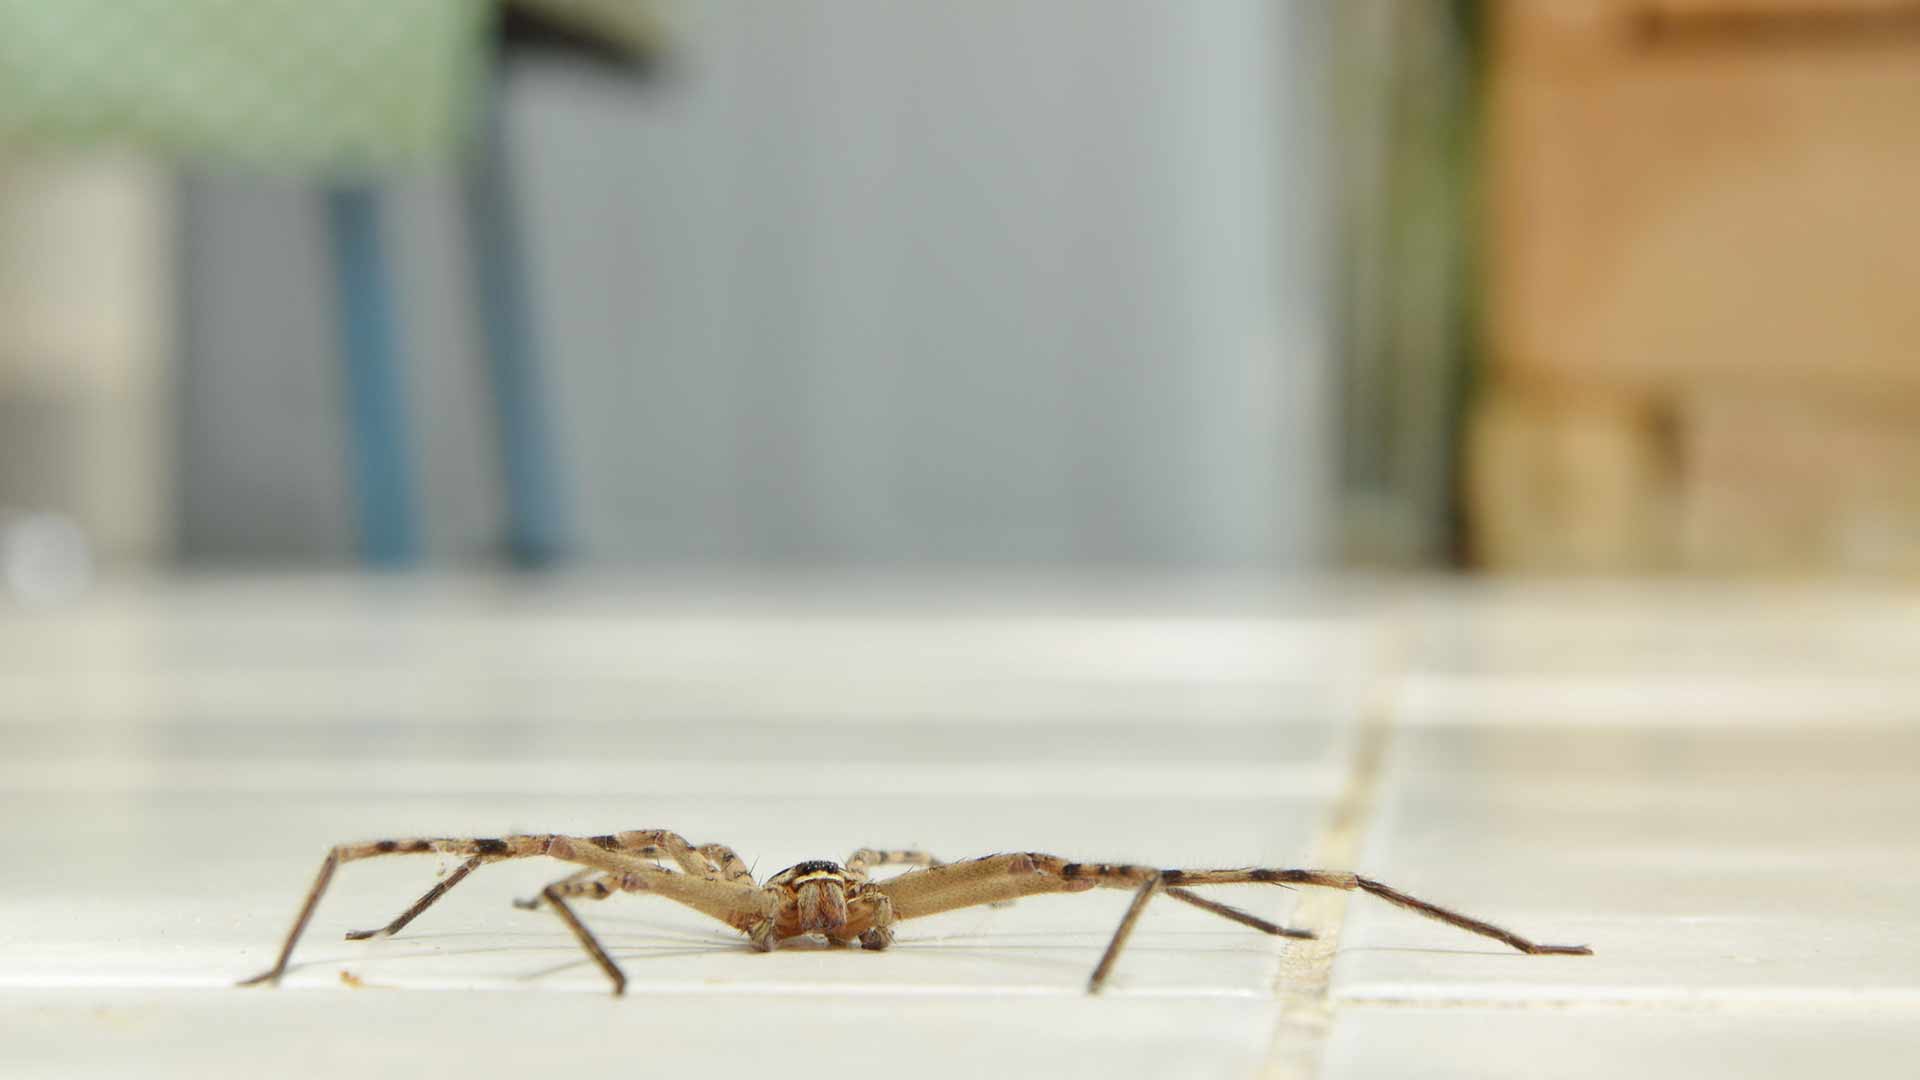 Spider crawling on a ceramic tile floor